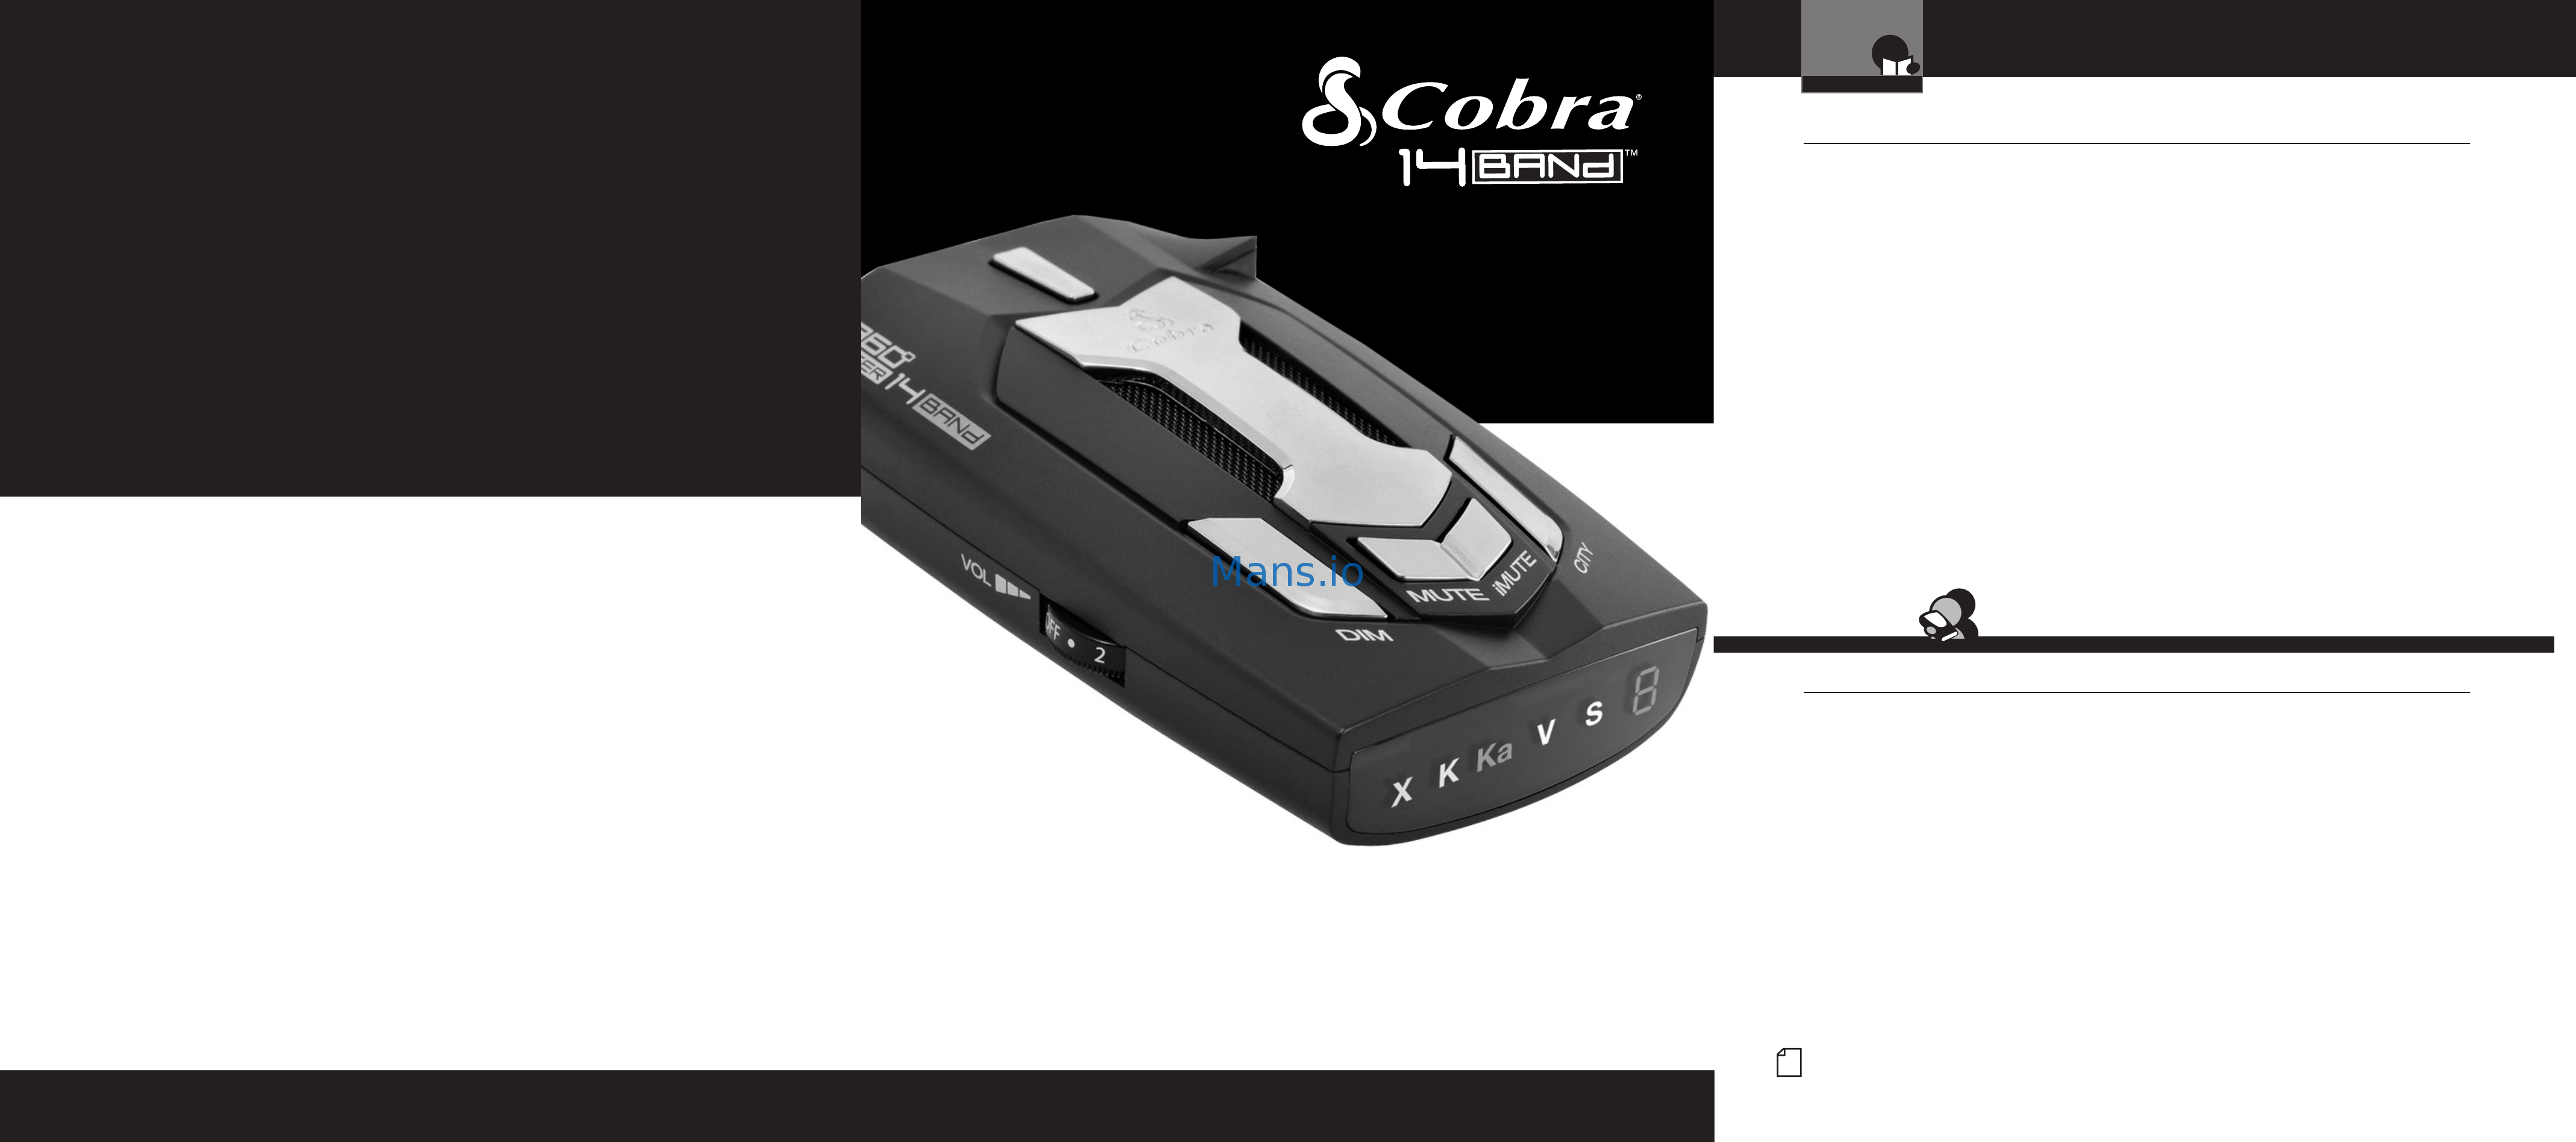 cobra spx 900 manual download